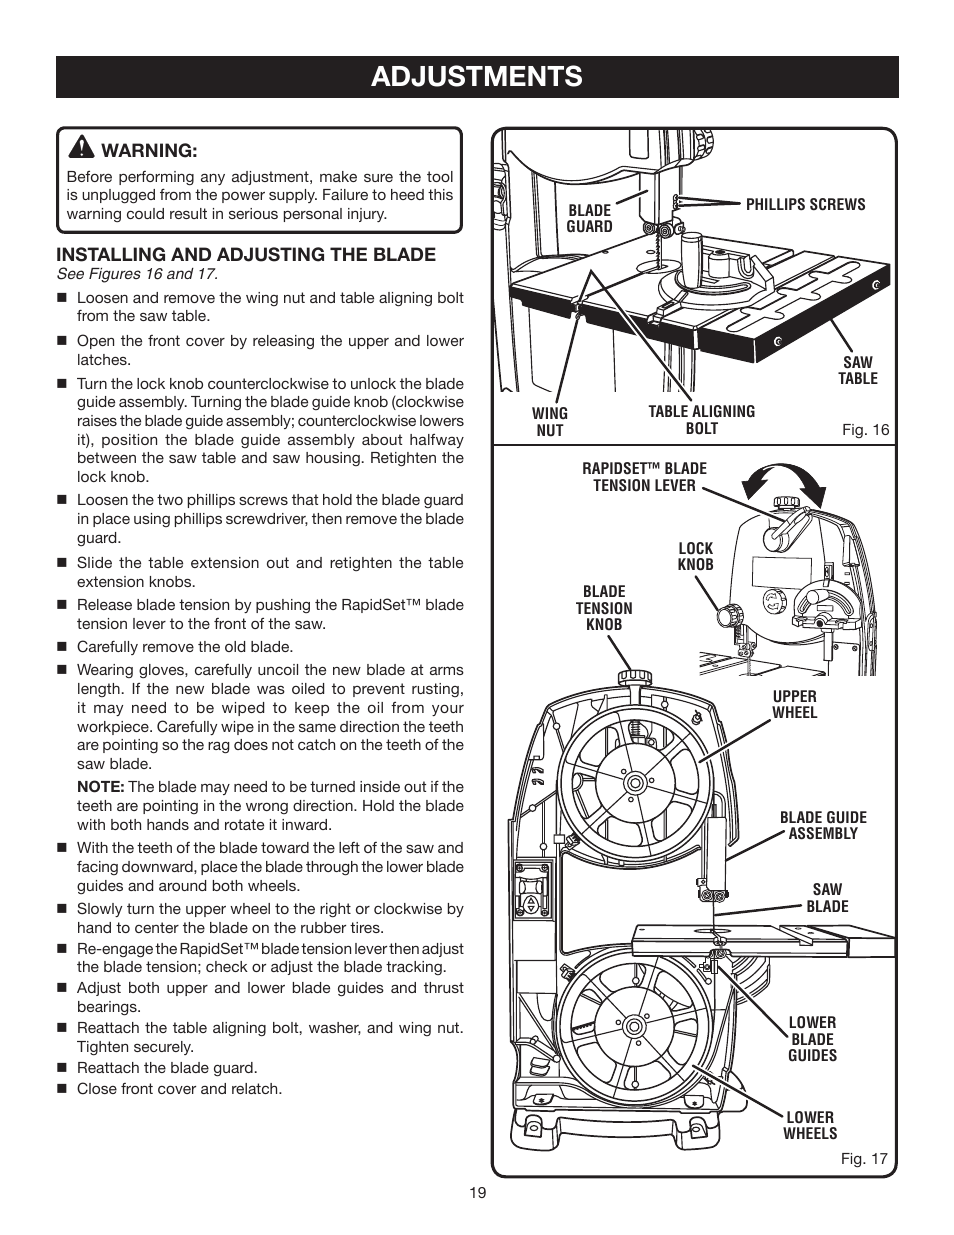 Adjustments | Ryobi BS903 User Manual | Page 19 / 26 | Original mode